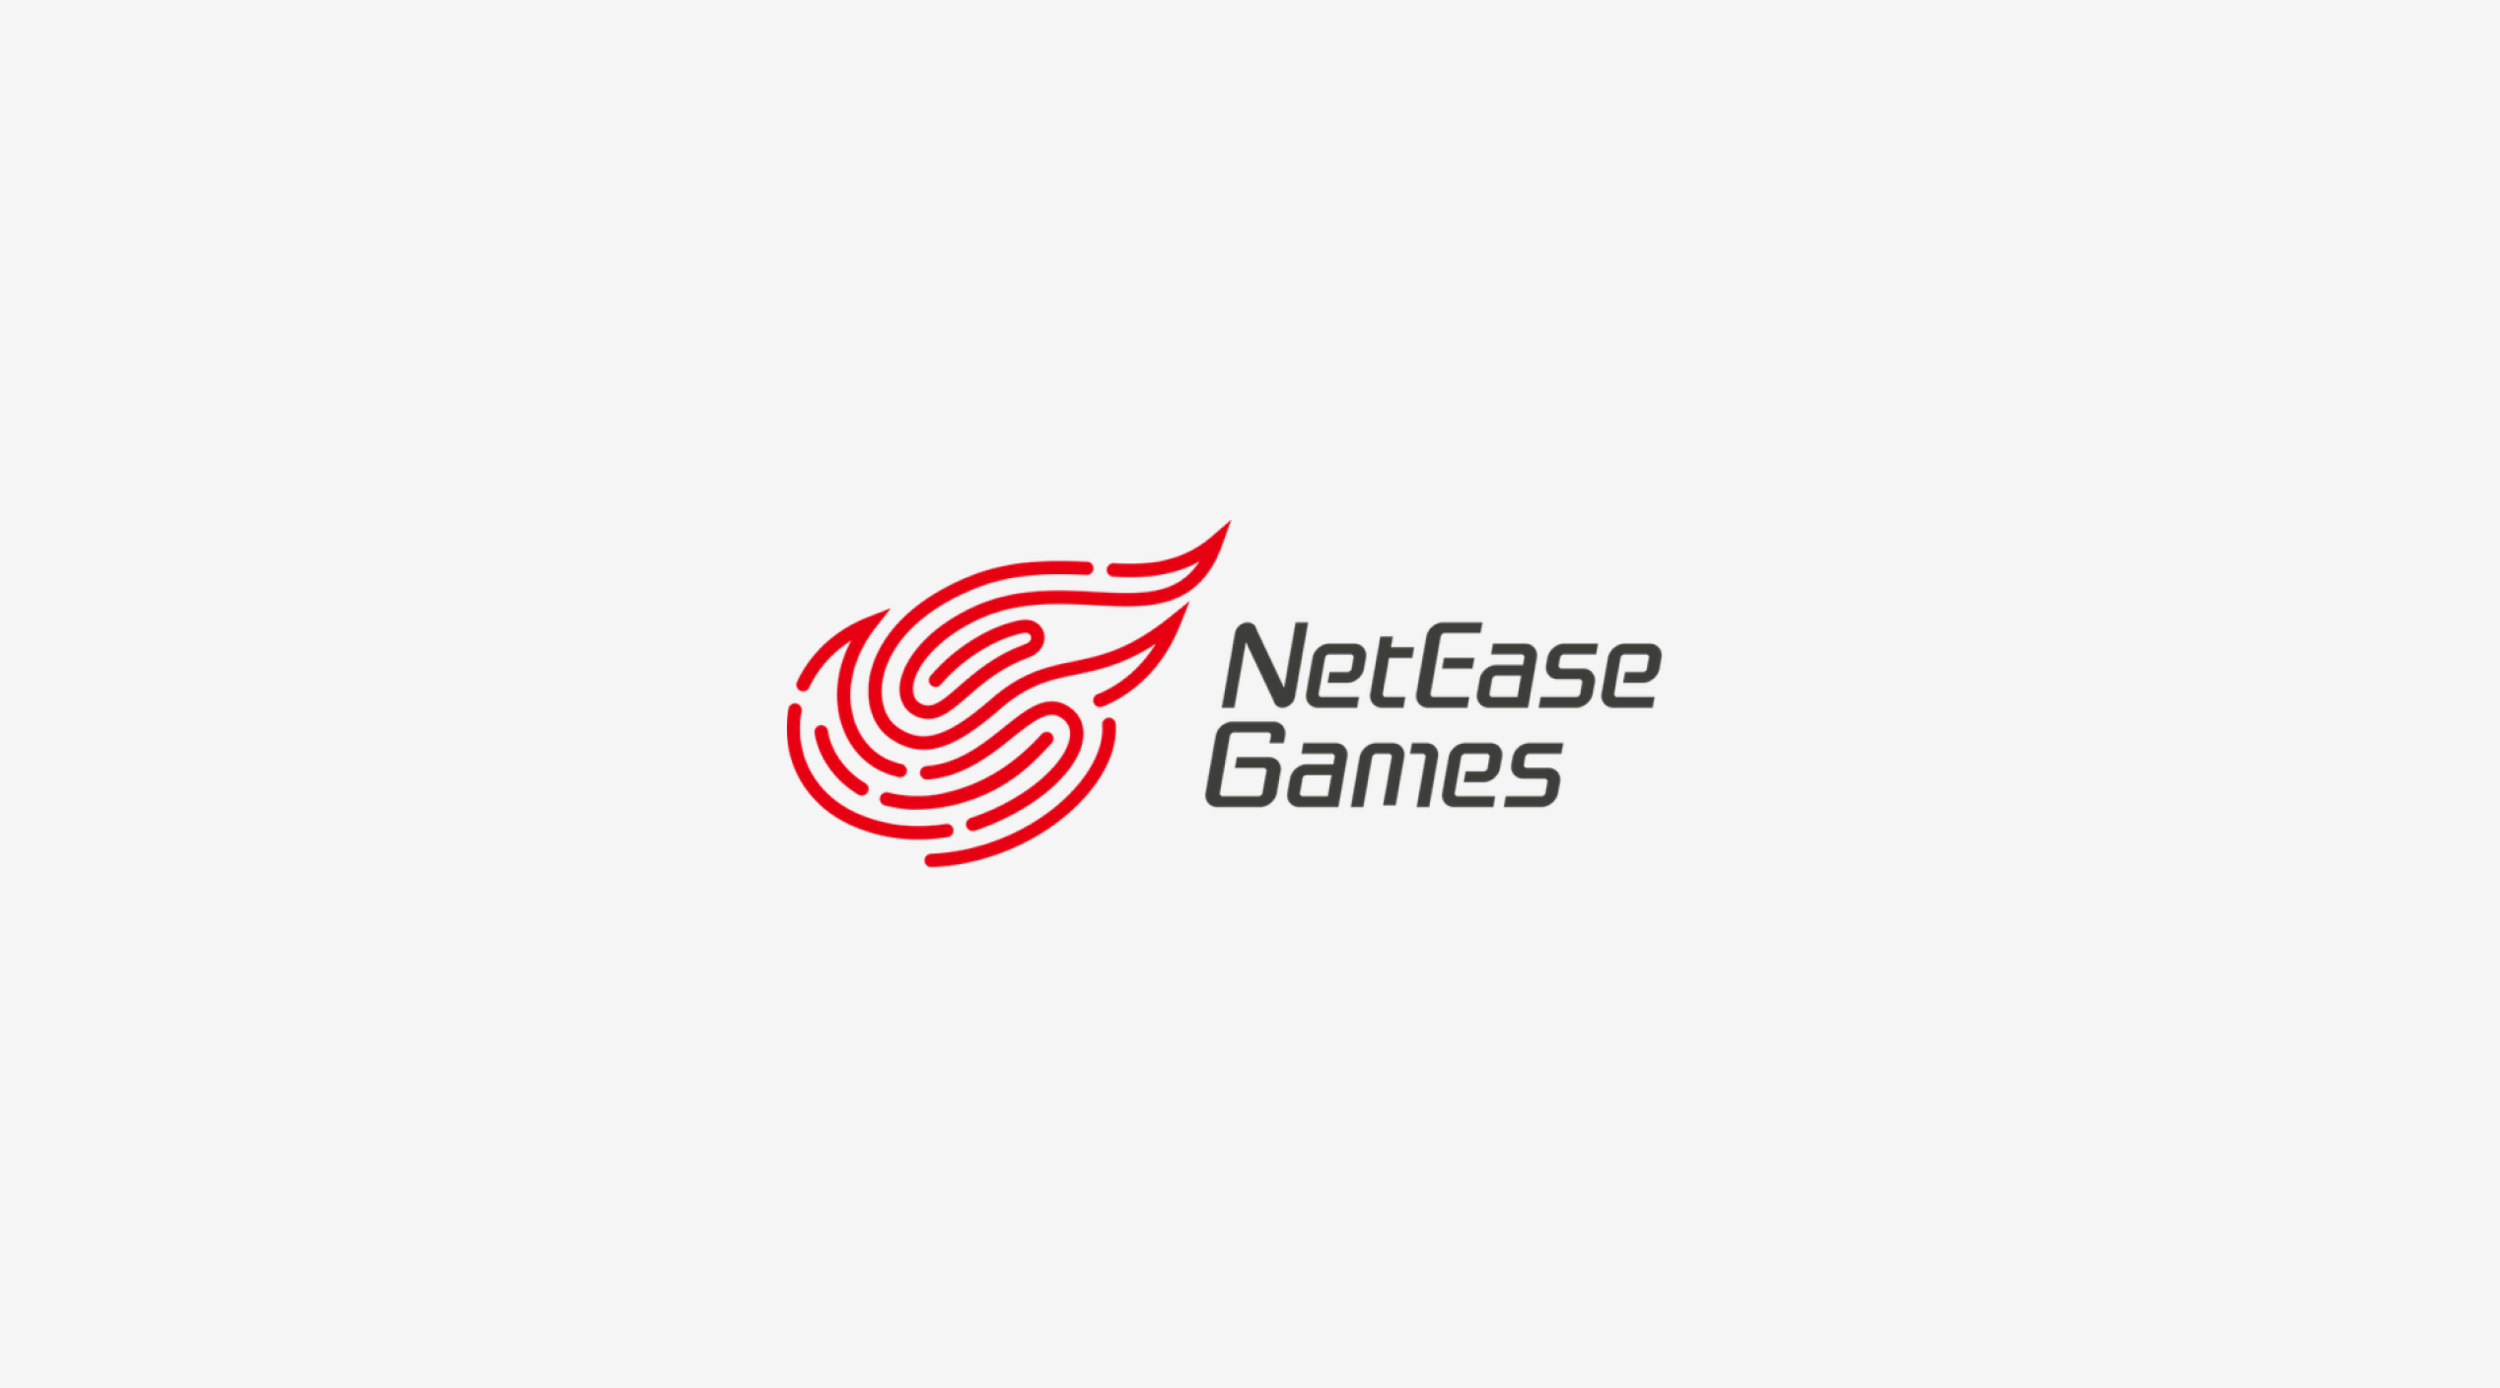 Ardor gaming i5. NETEASE games. NETEASE офис. NETEASE logo. Ardor Gaming логотип.